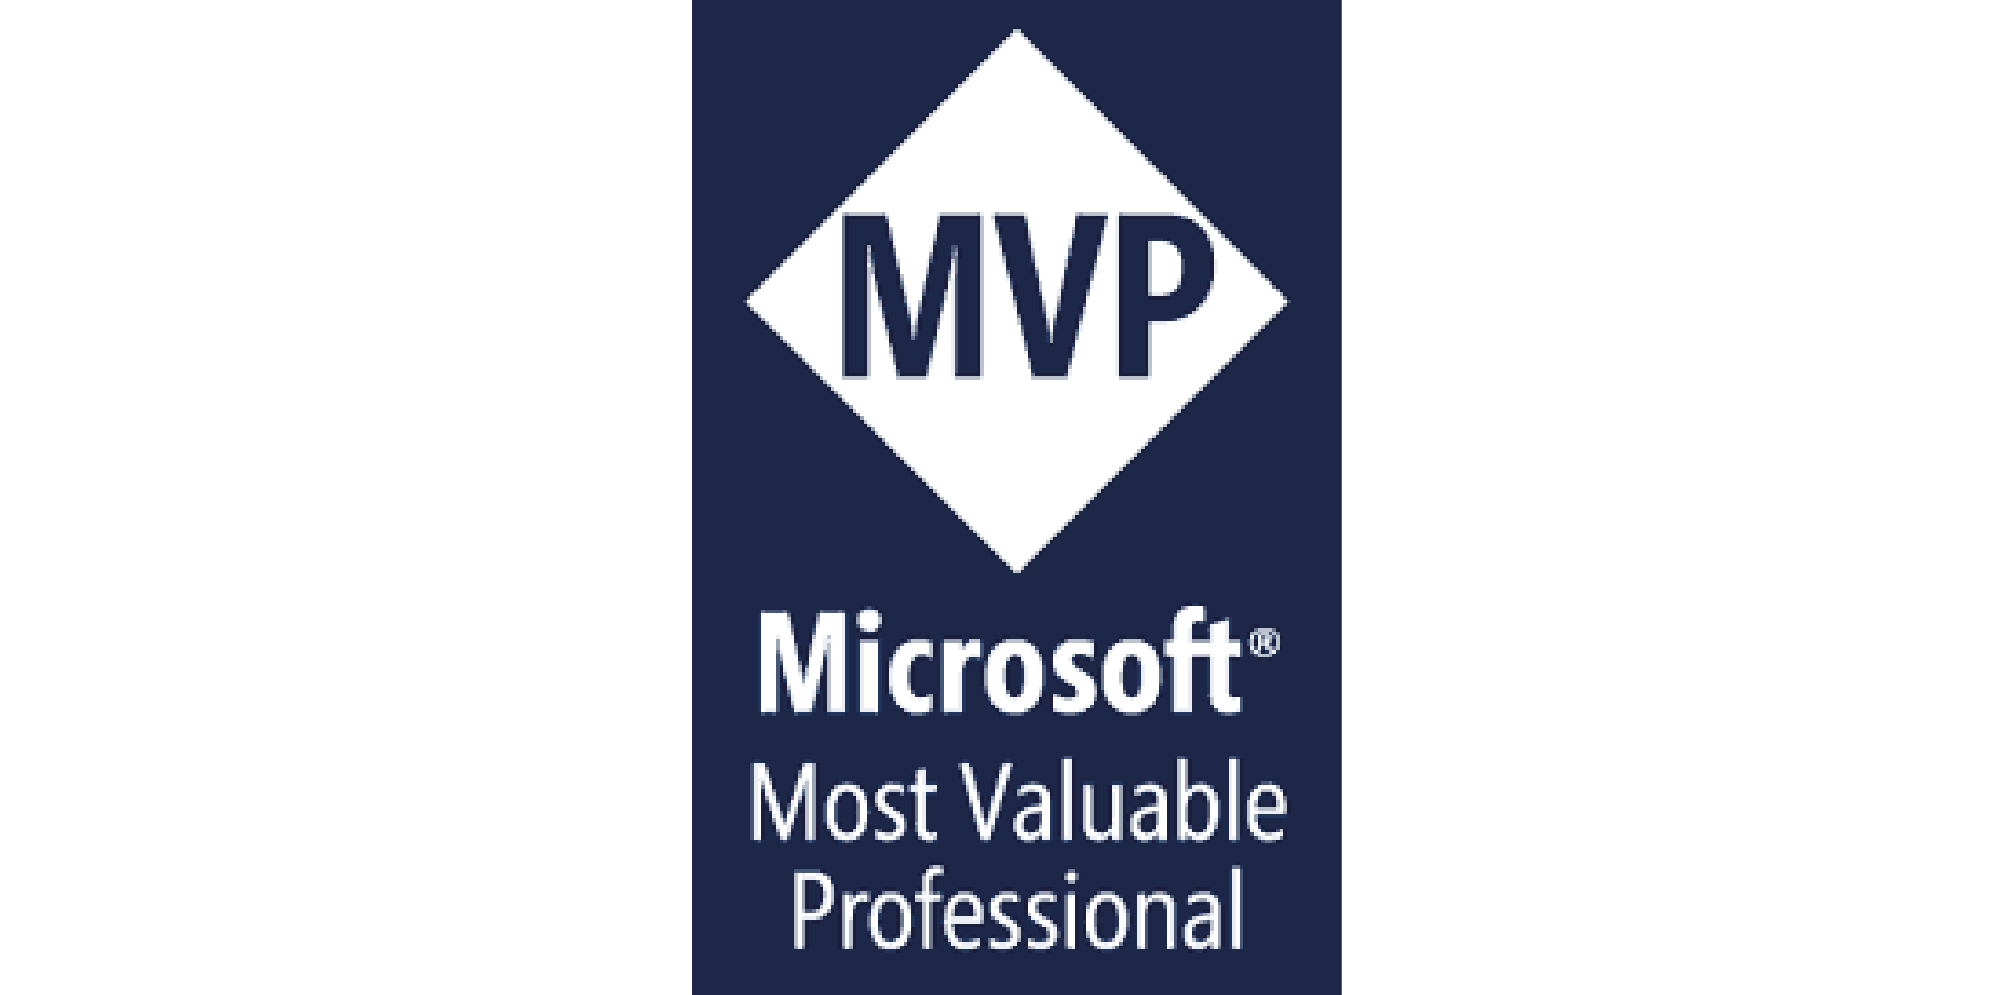 Microsoft MVP